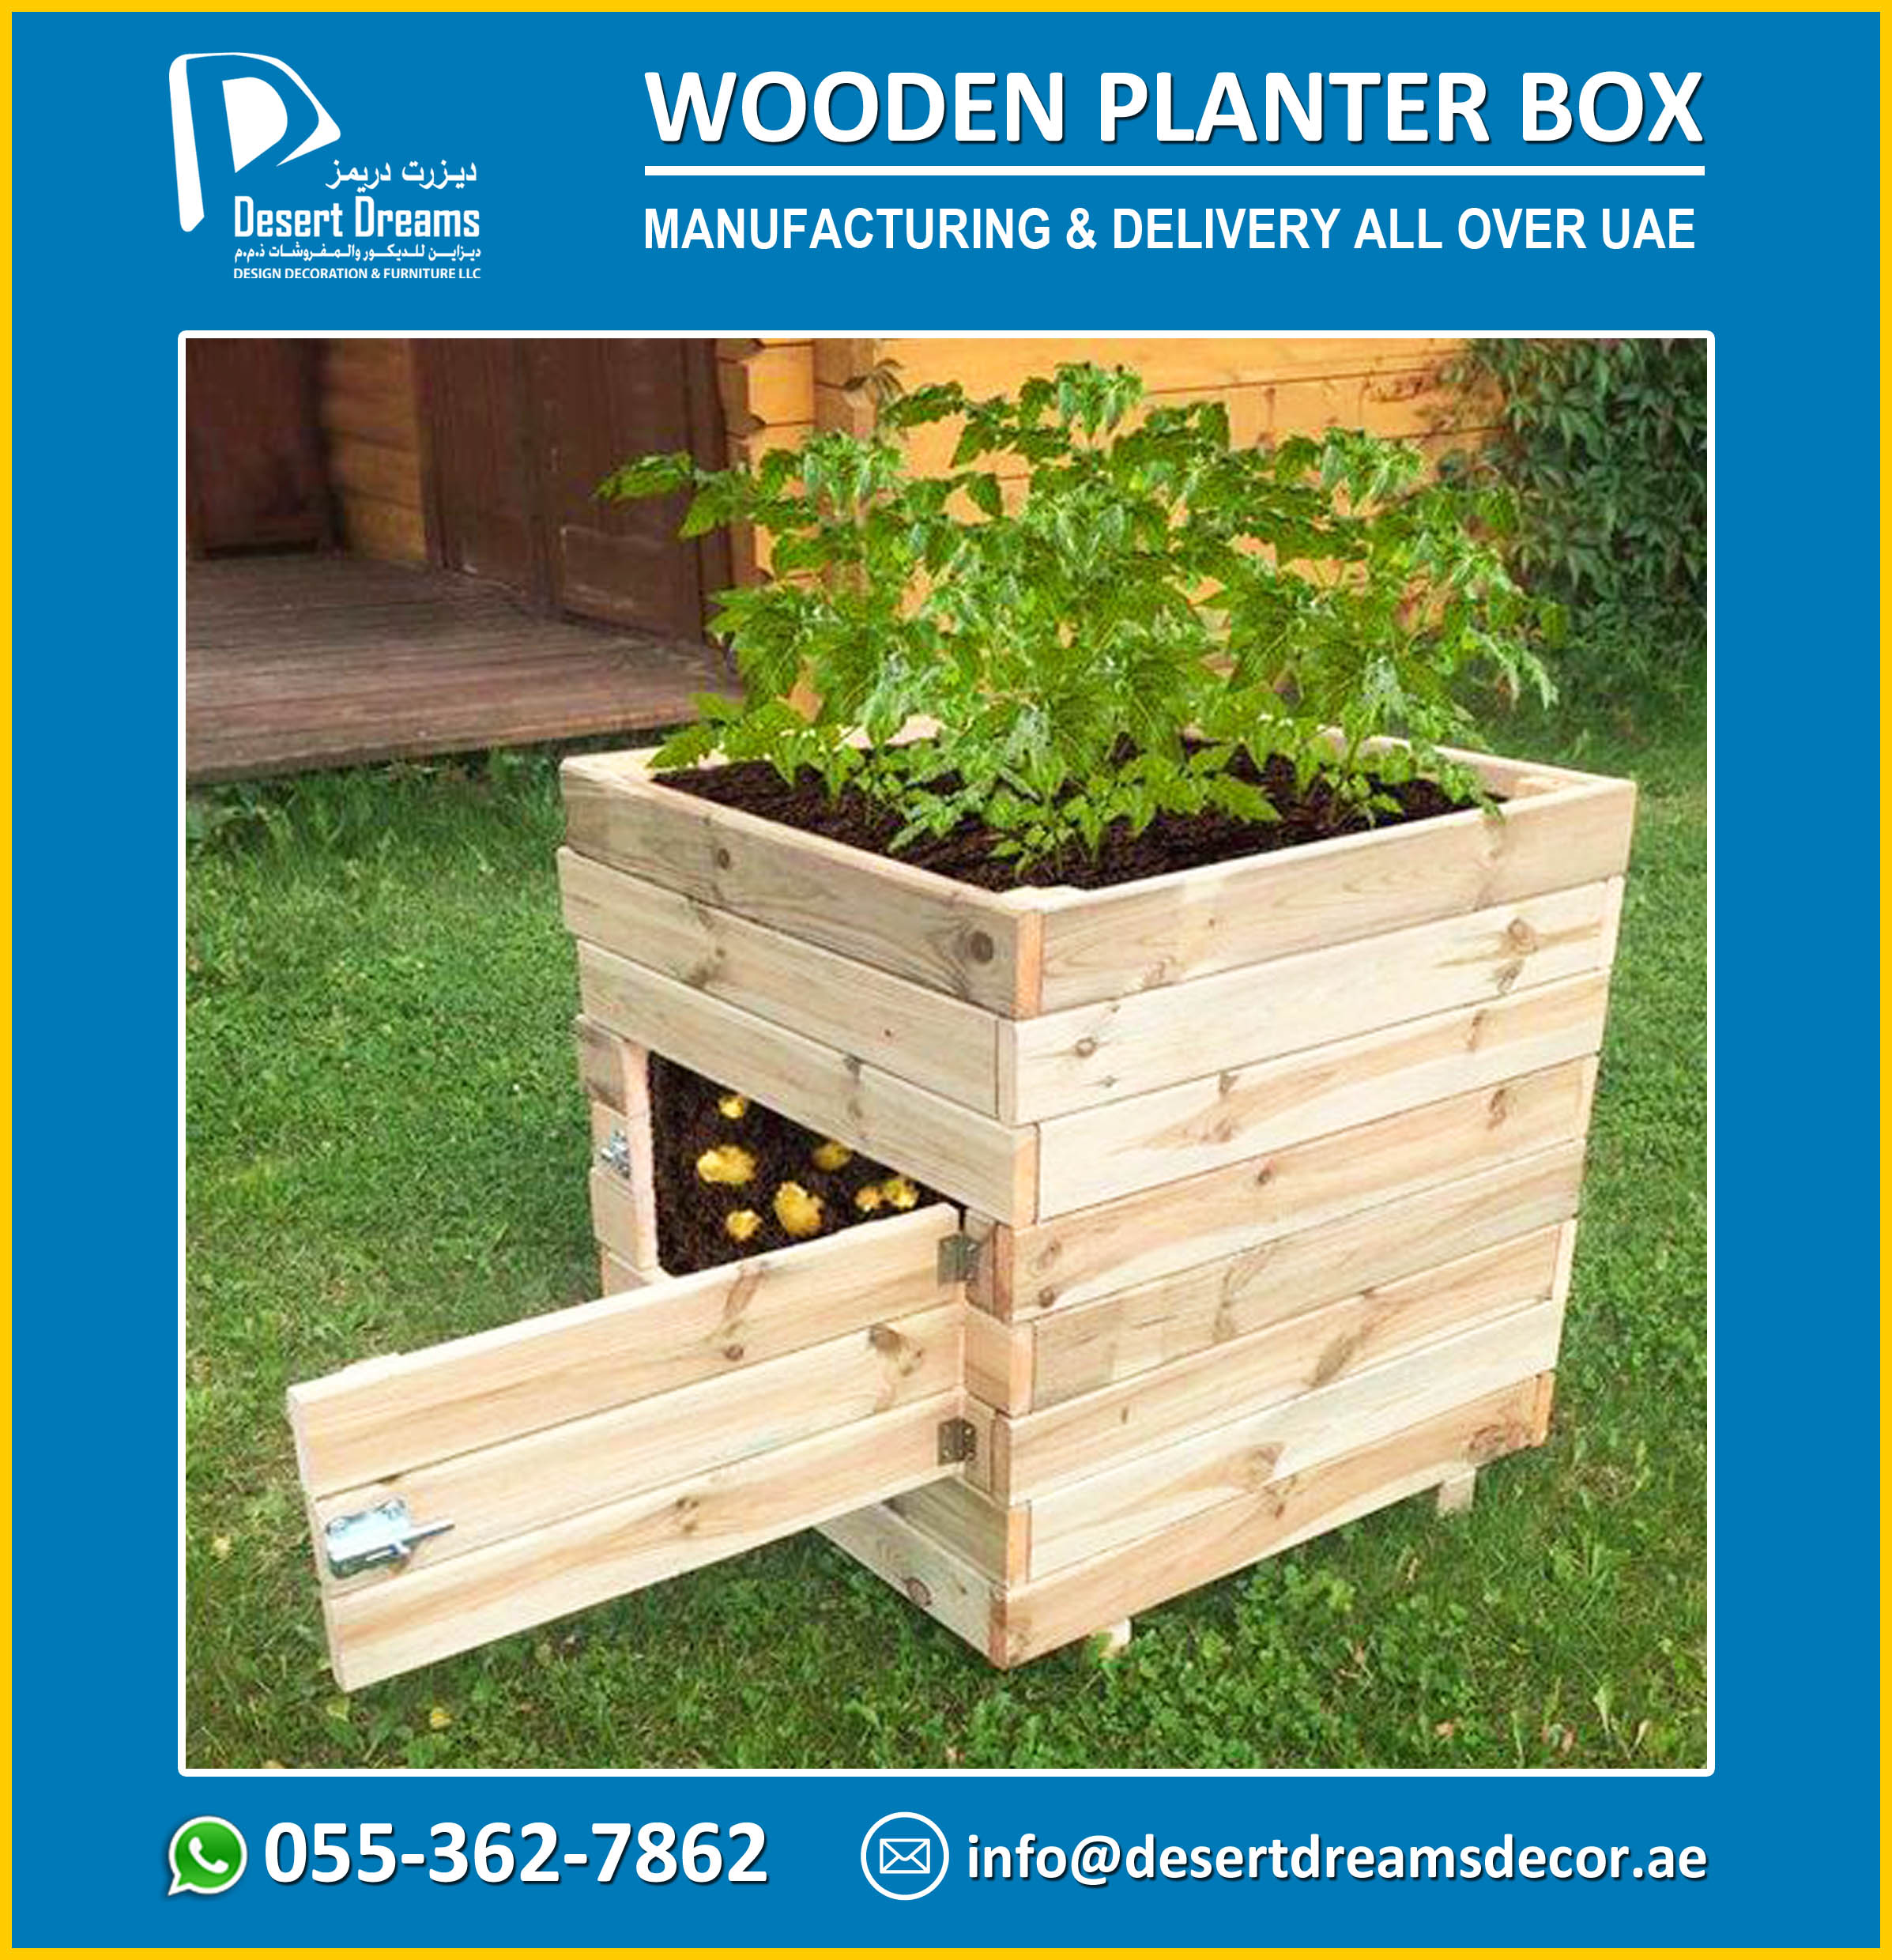 Wooden Planter Suppliers in UAE_Wooden Planter Box in UAE (6).jpg